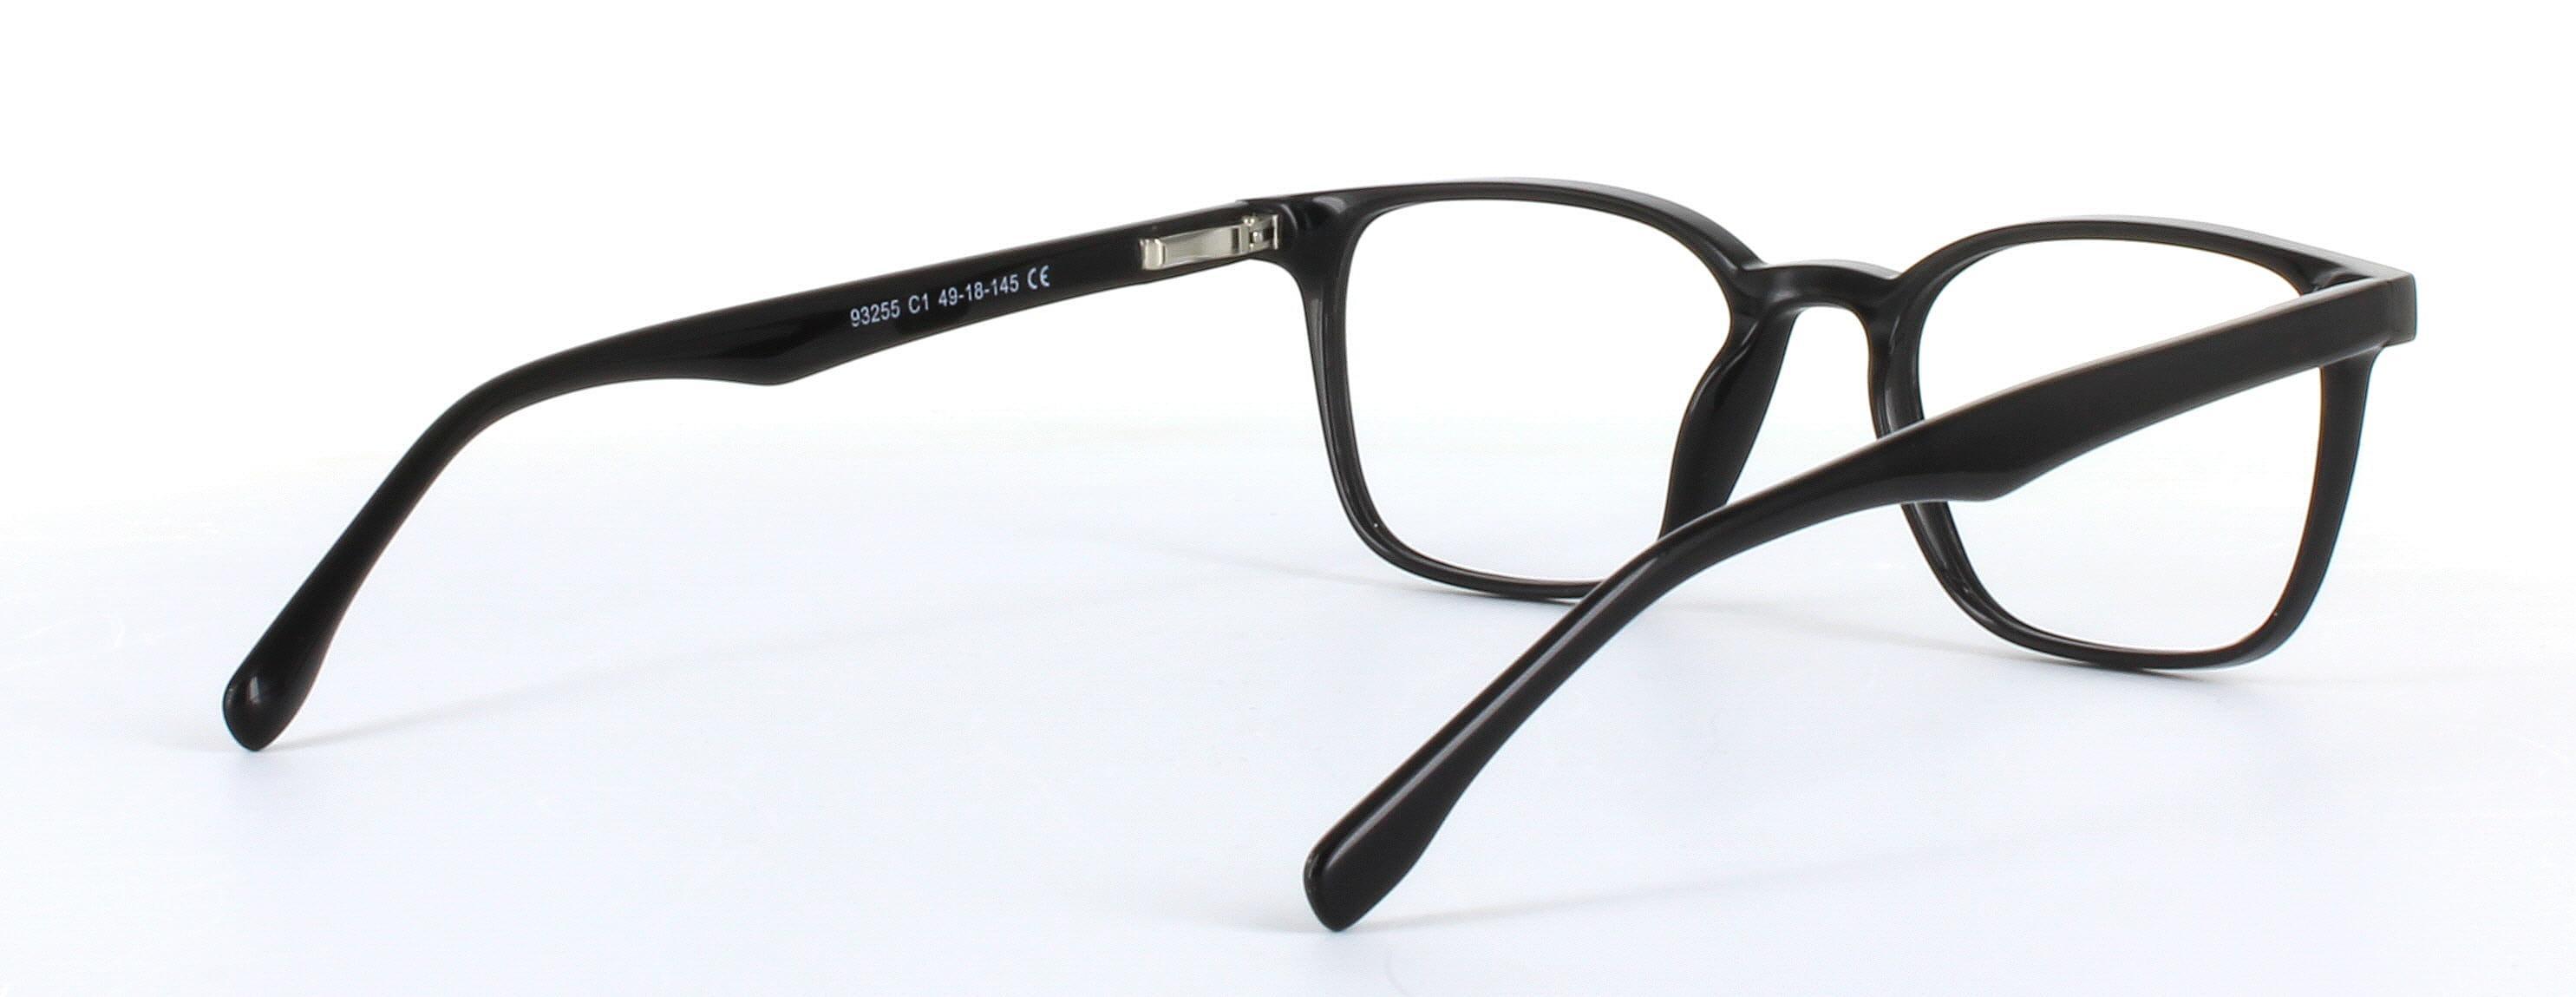 Hodson Black Full Rim Acetate Glasses - Image View 4